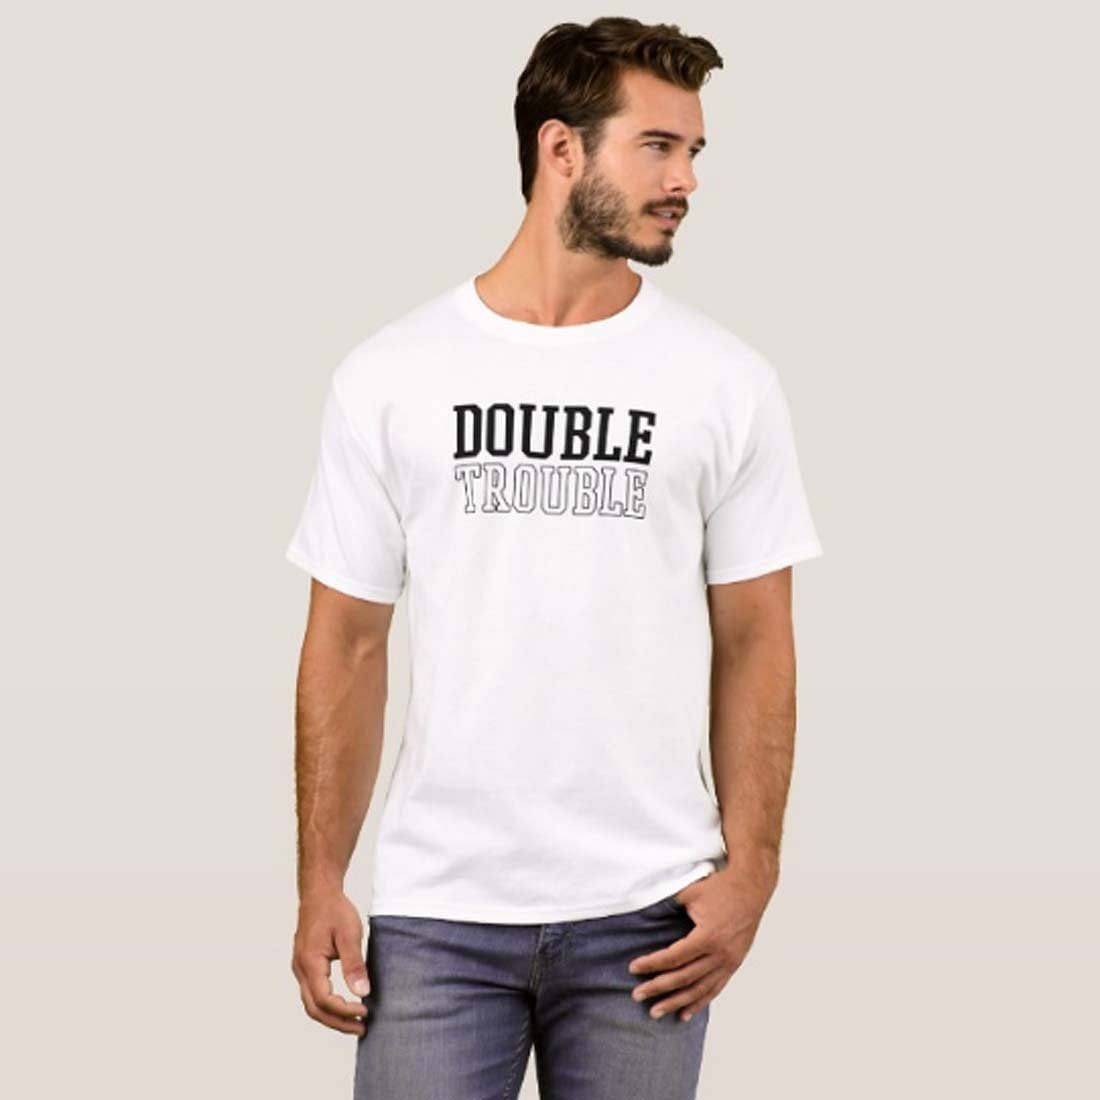 Nutcase Designer Round Neck Men's T-Shirt Wrinkle-Free Poly Cotton Tees - Double Trouble Nutcase